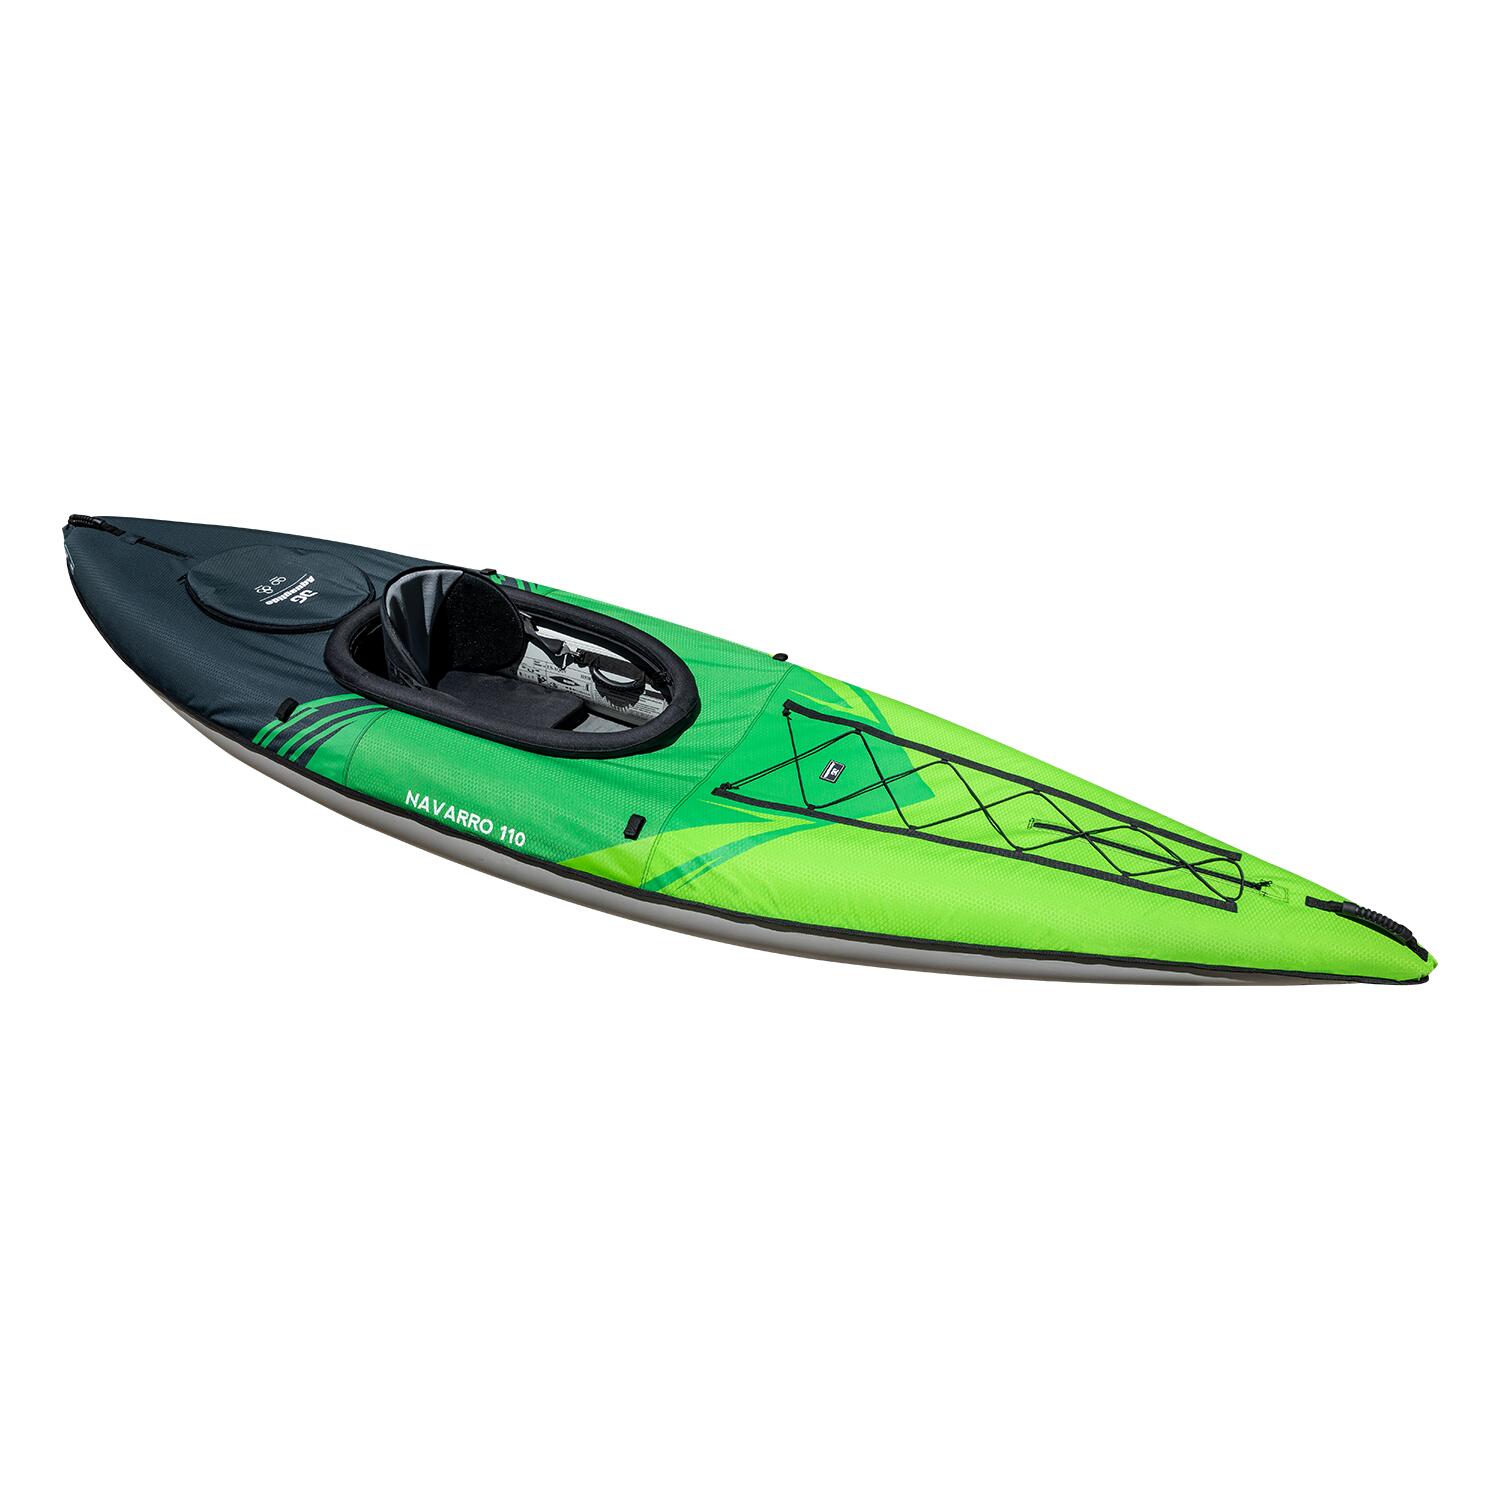 Navarro 130 - Inflatable Touring Kayak 3/5